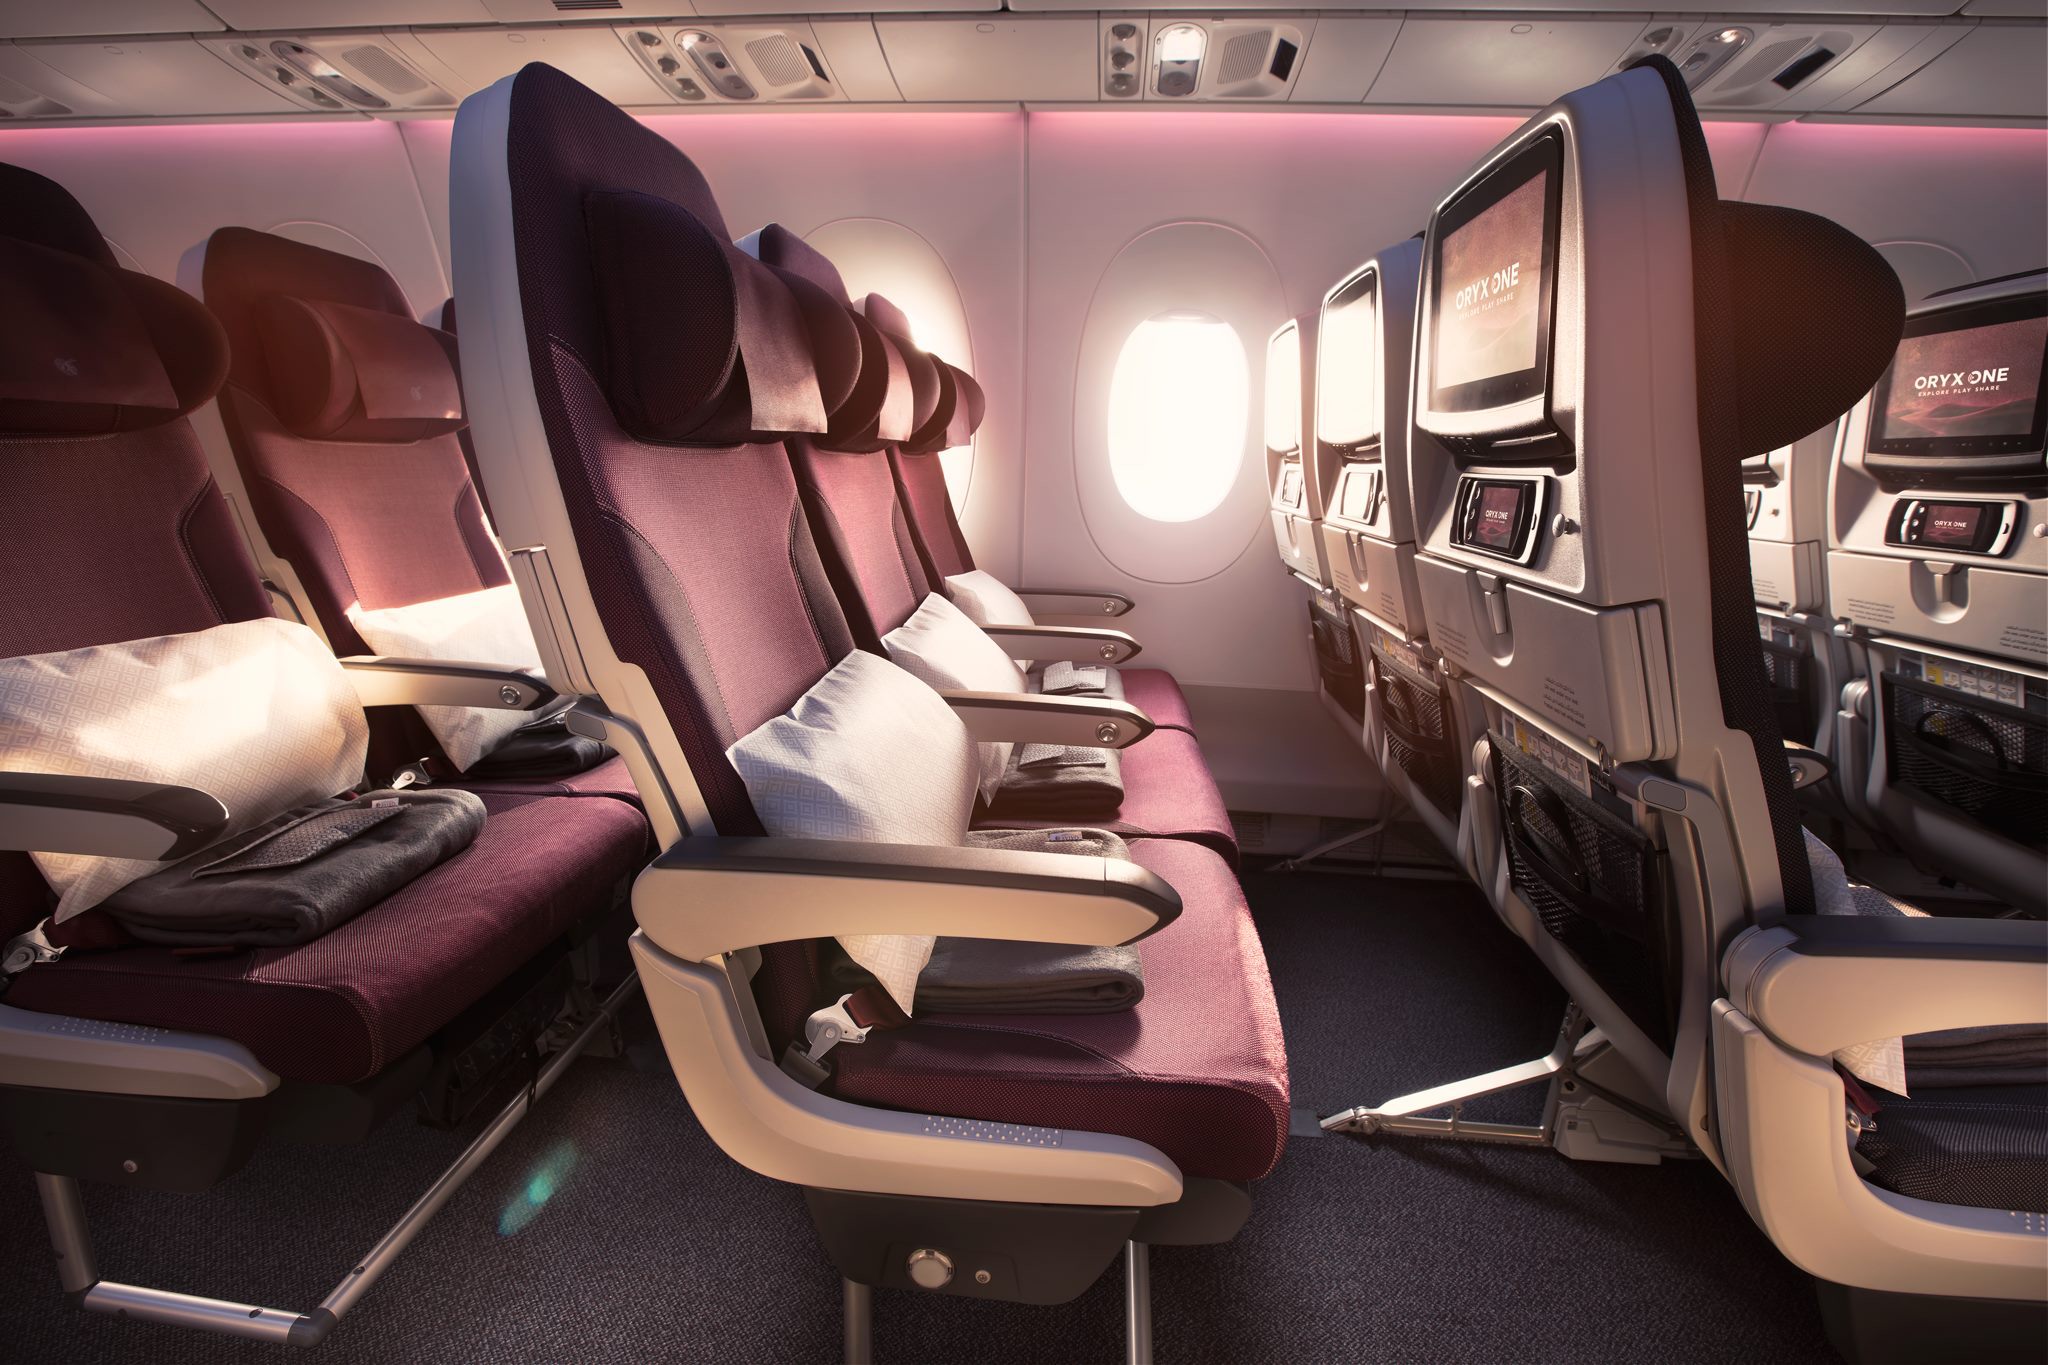 Qatar Airways Review: A380 Economy Class